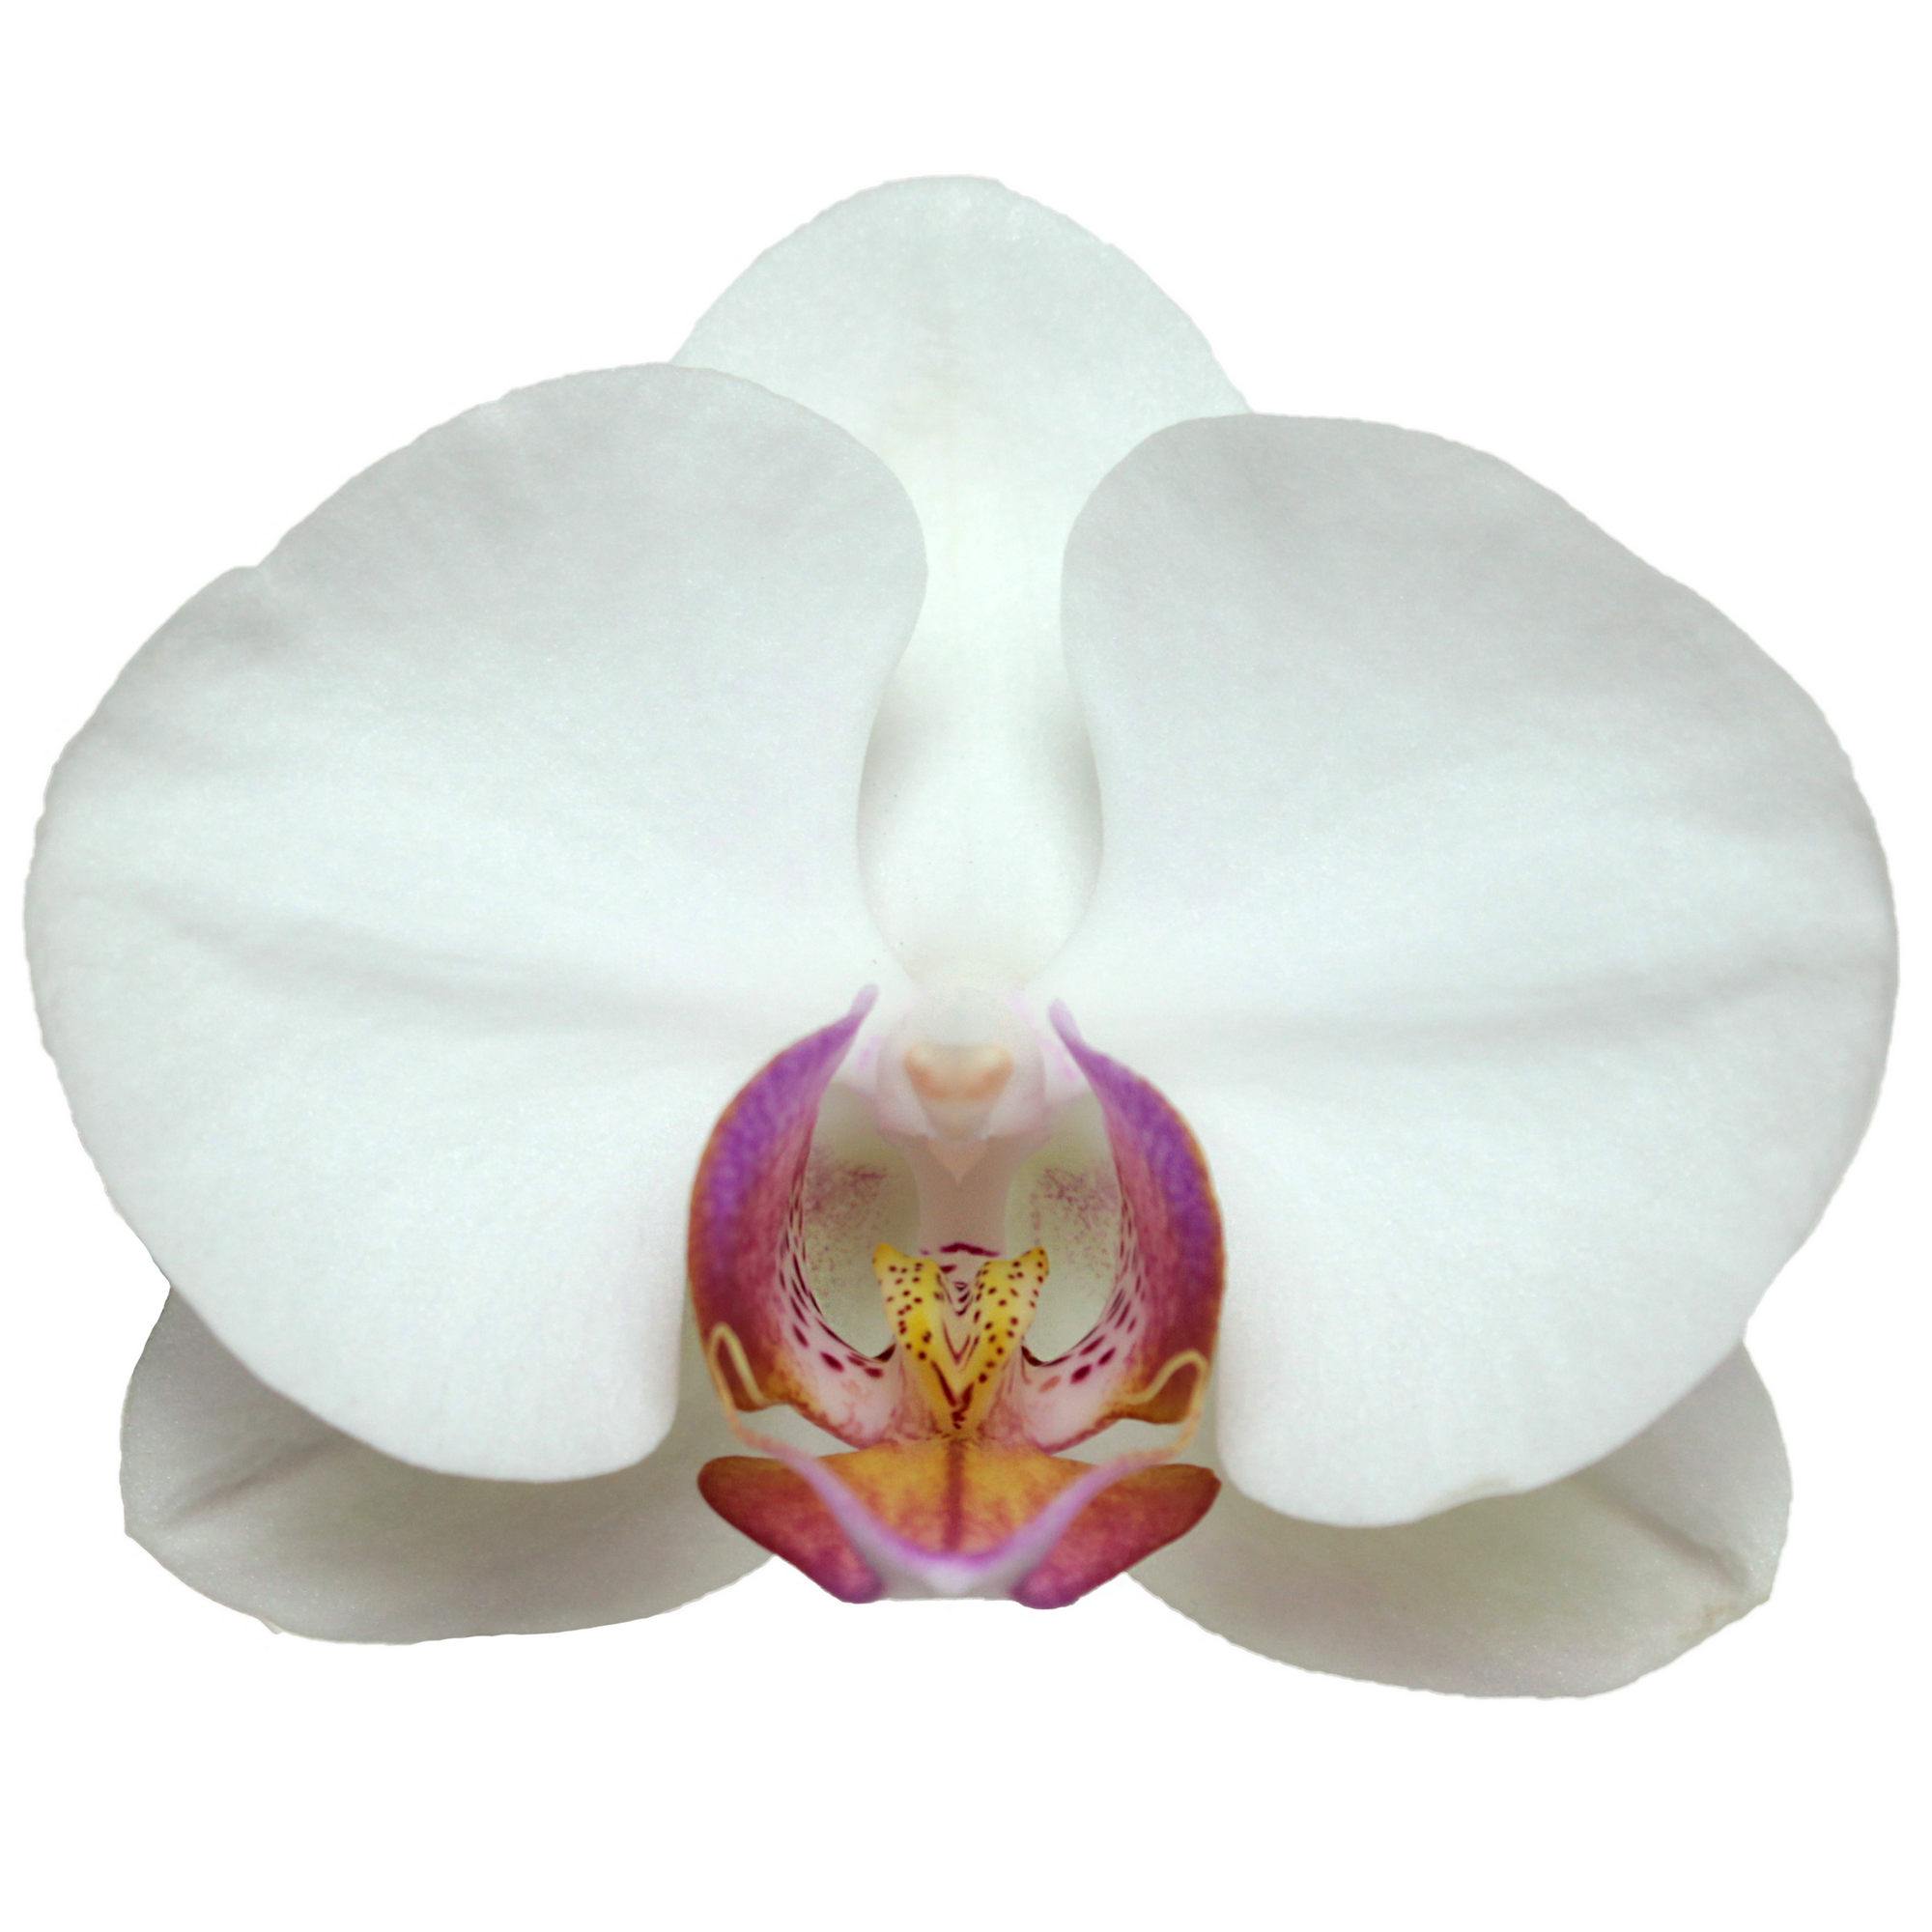 Schmetterlingsorchidee 2 Rispen weiß mit violettem Auge 12 cm Topf + product picture